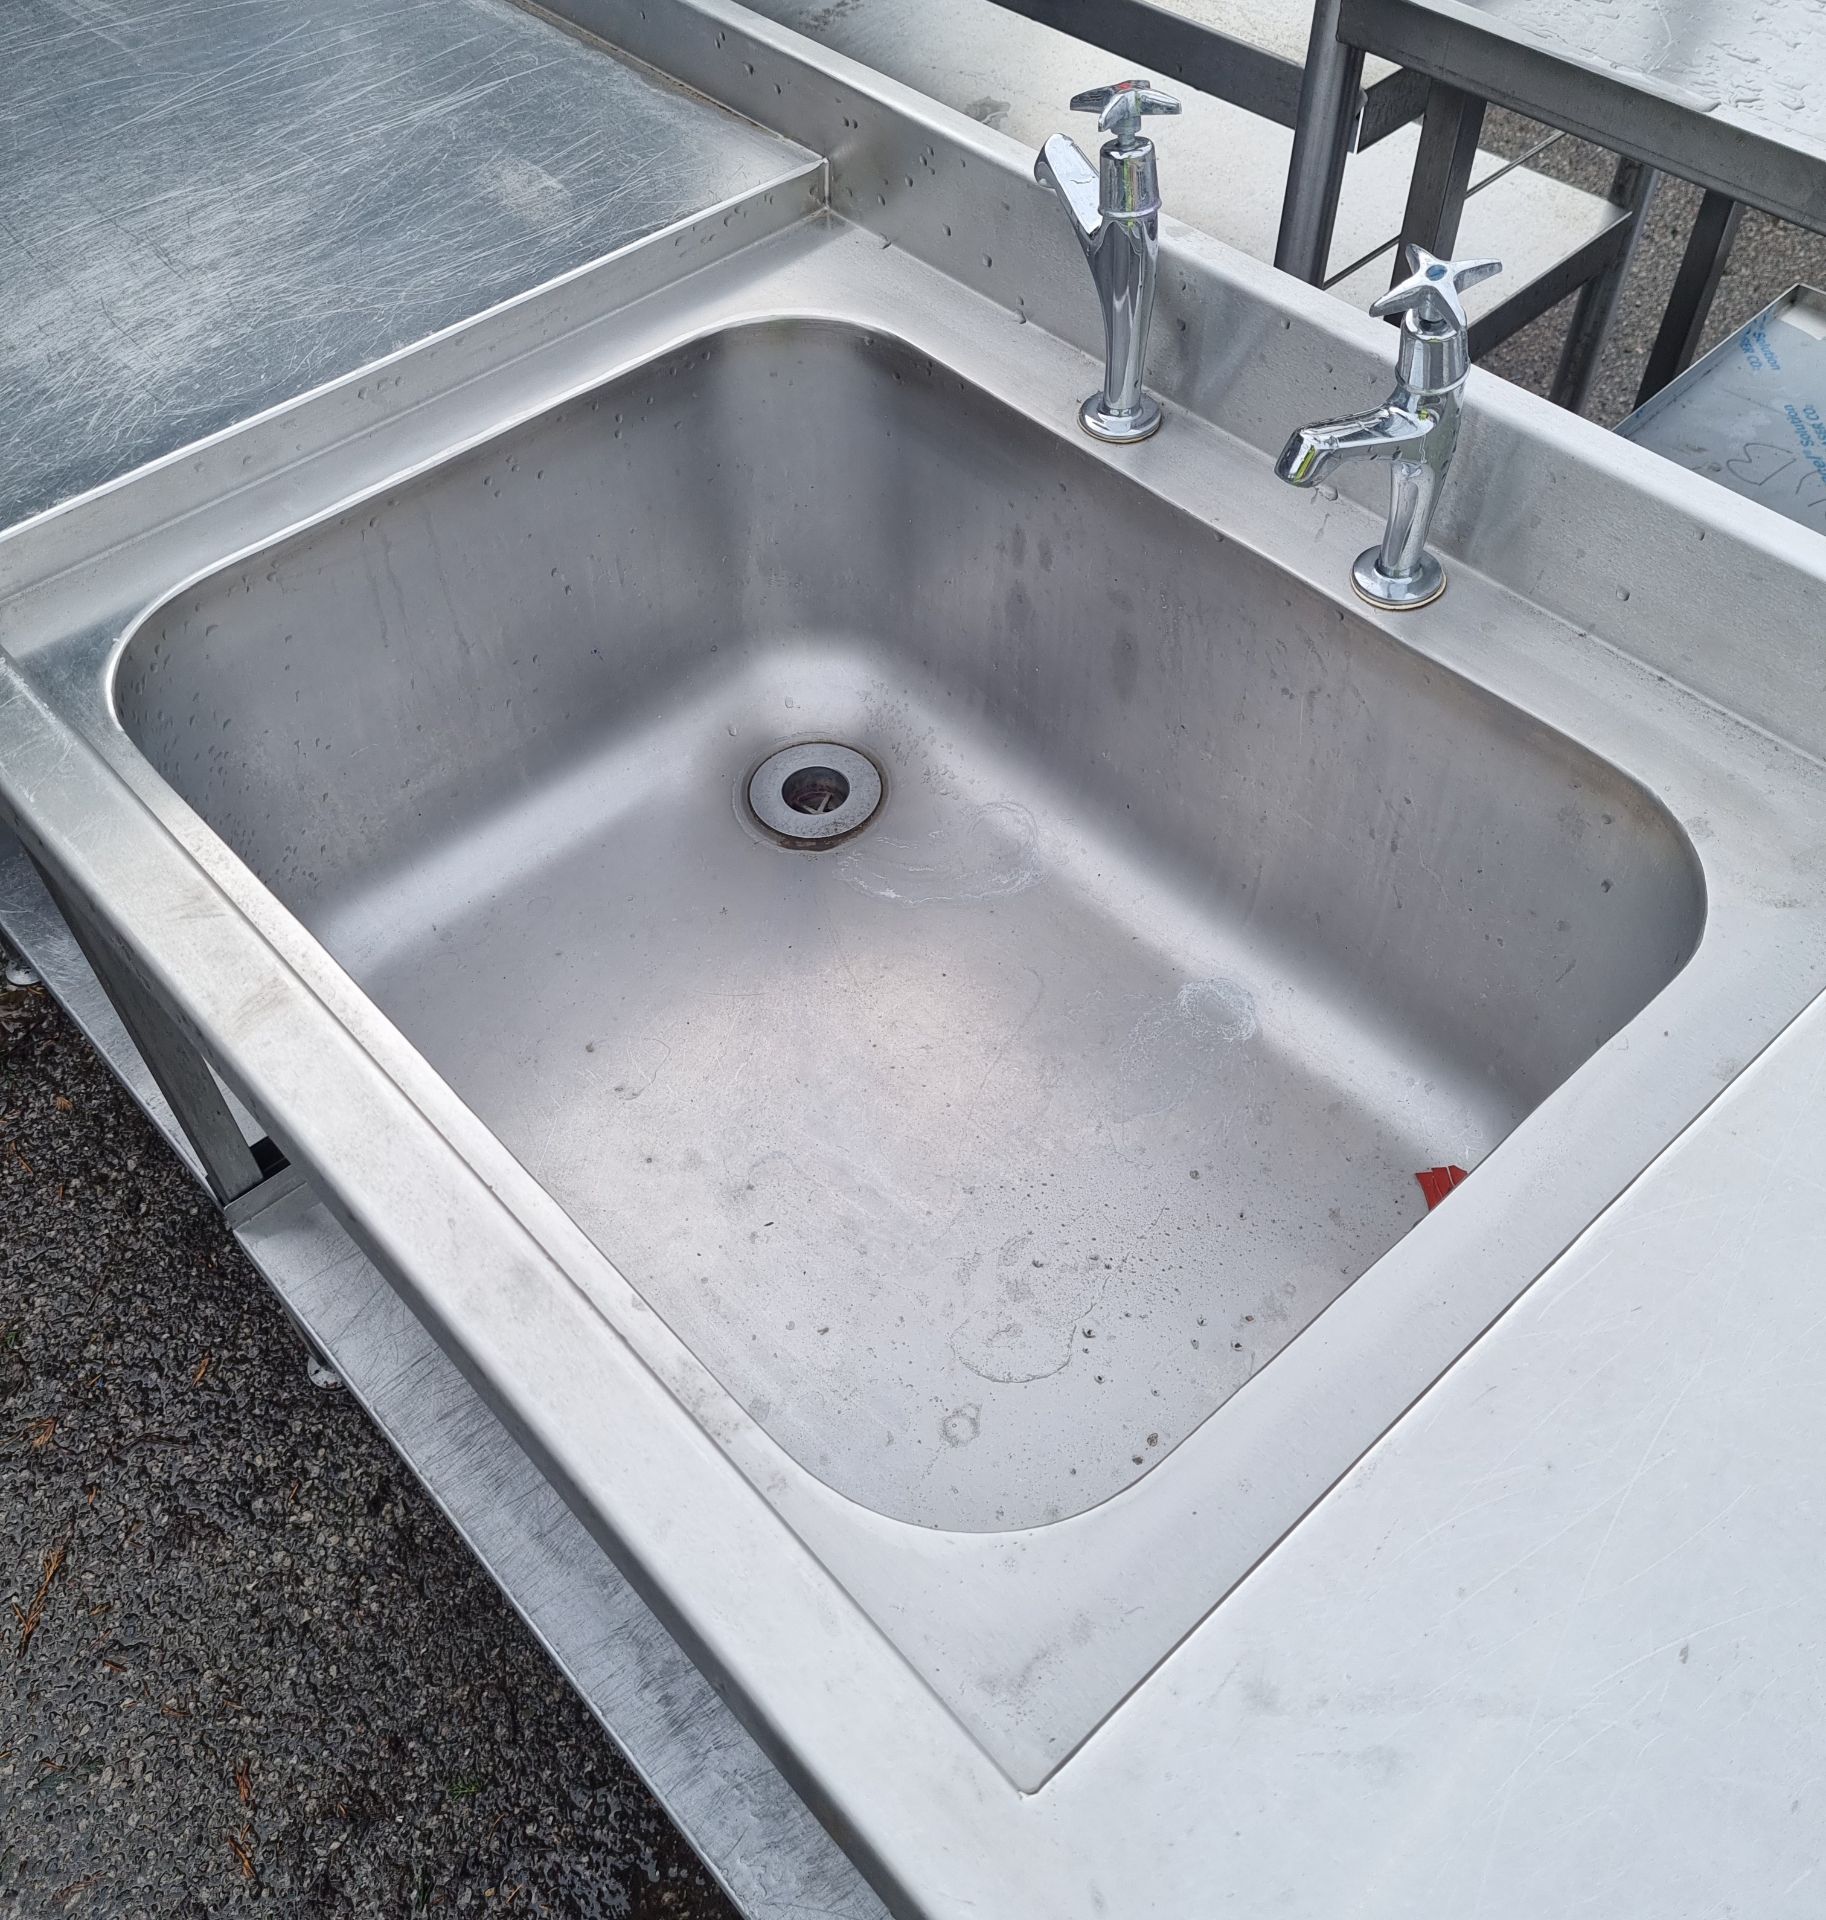 Stainless steel preparation table with sink - 203 x 62 x 108cm - Bild 2 aus 3